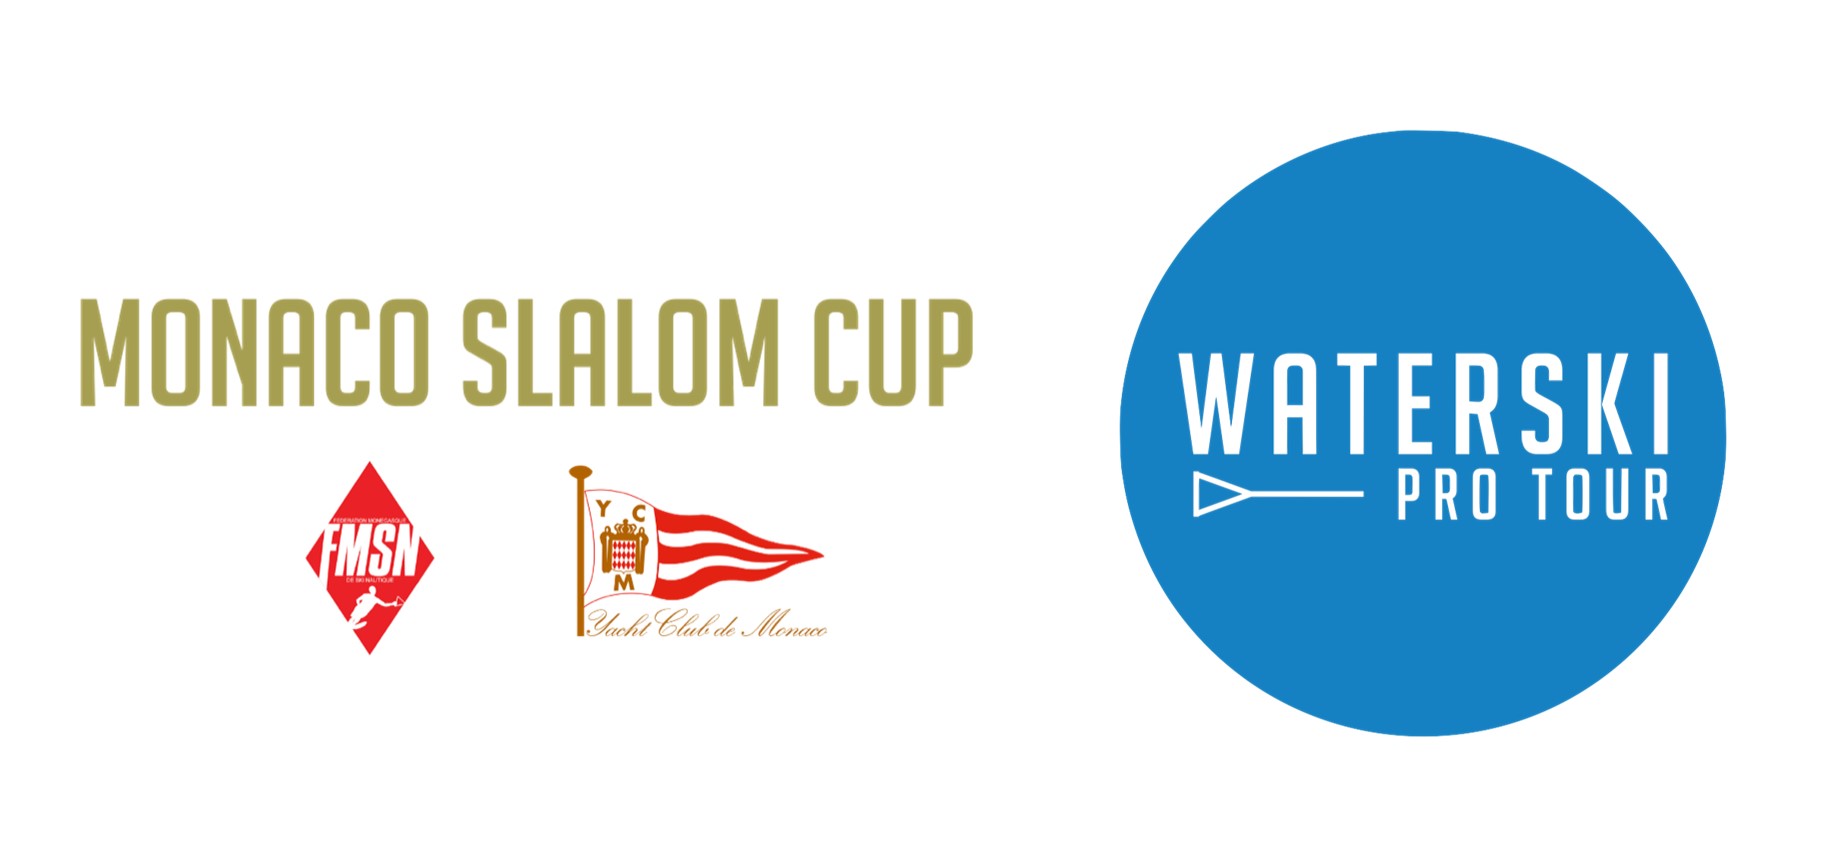 Monaco Slalom Cup - Waterski Pro Tour